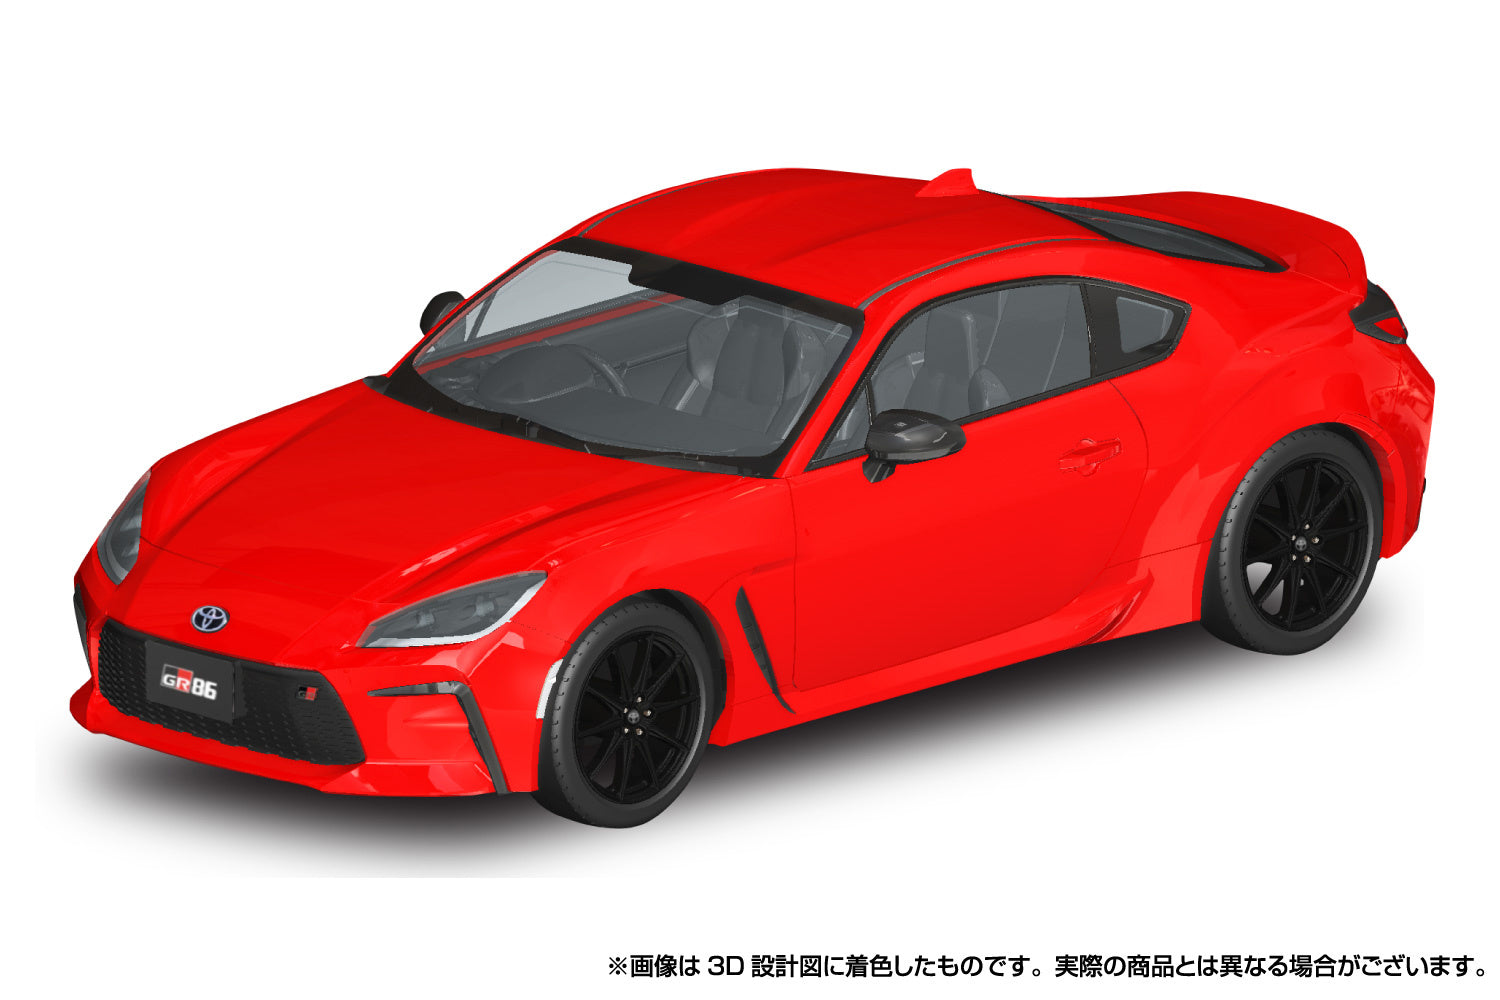 Aoshima - The Snap Kit - Toyota GR-86 (Spark Red) Model Kit (1/32 Scale) - Marvelous Toys